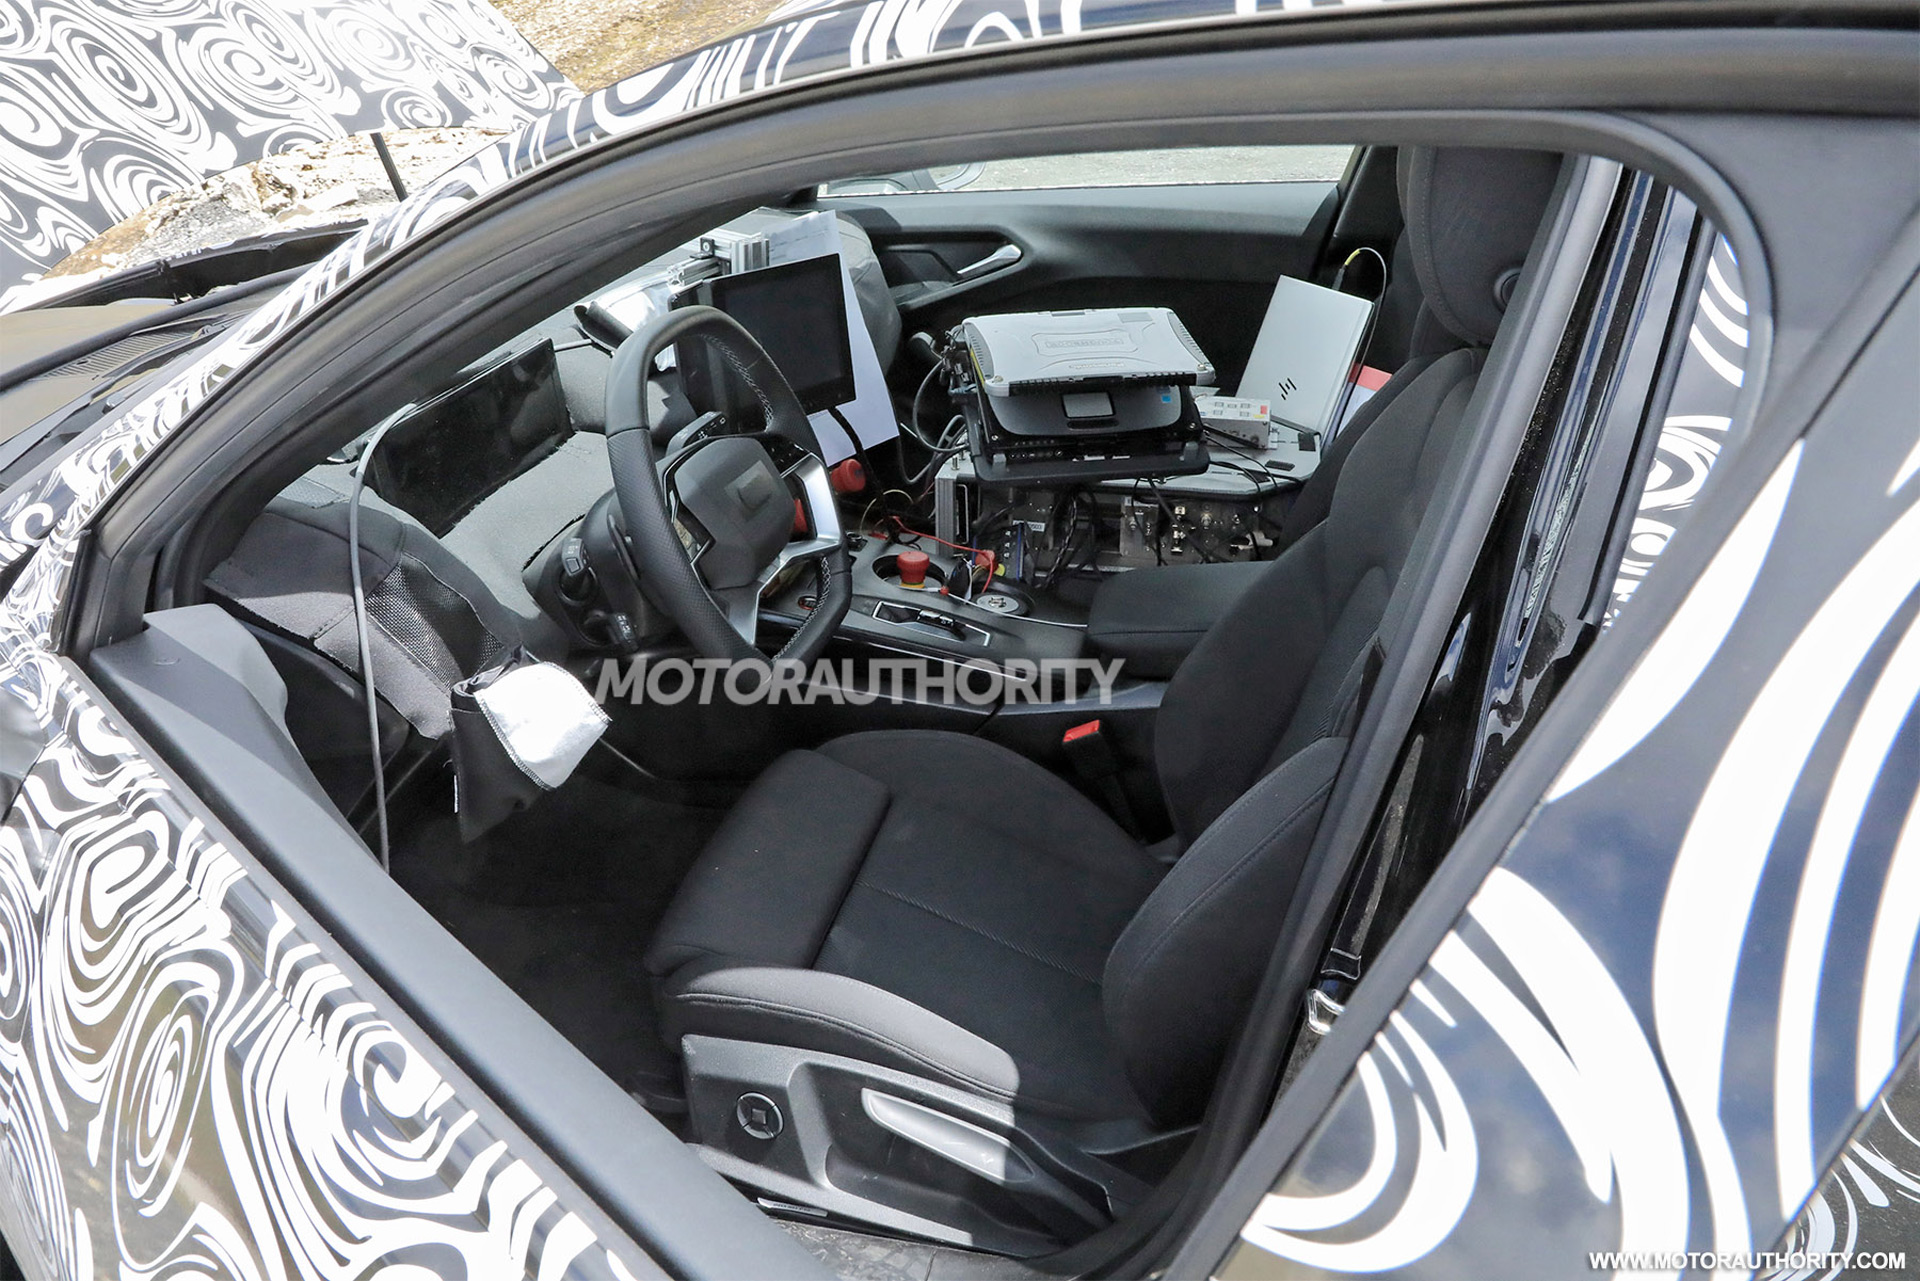 2024 Audi S4 Avant spy shots Speedy wagon spotted Auto Recent